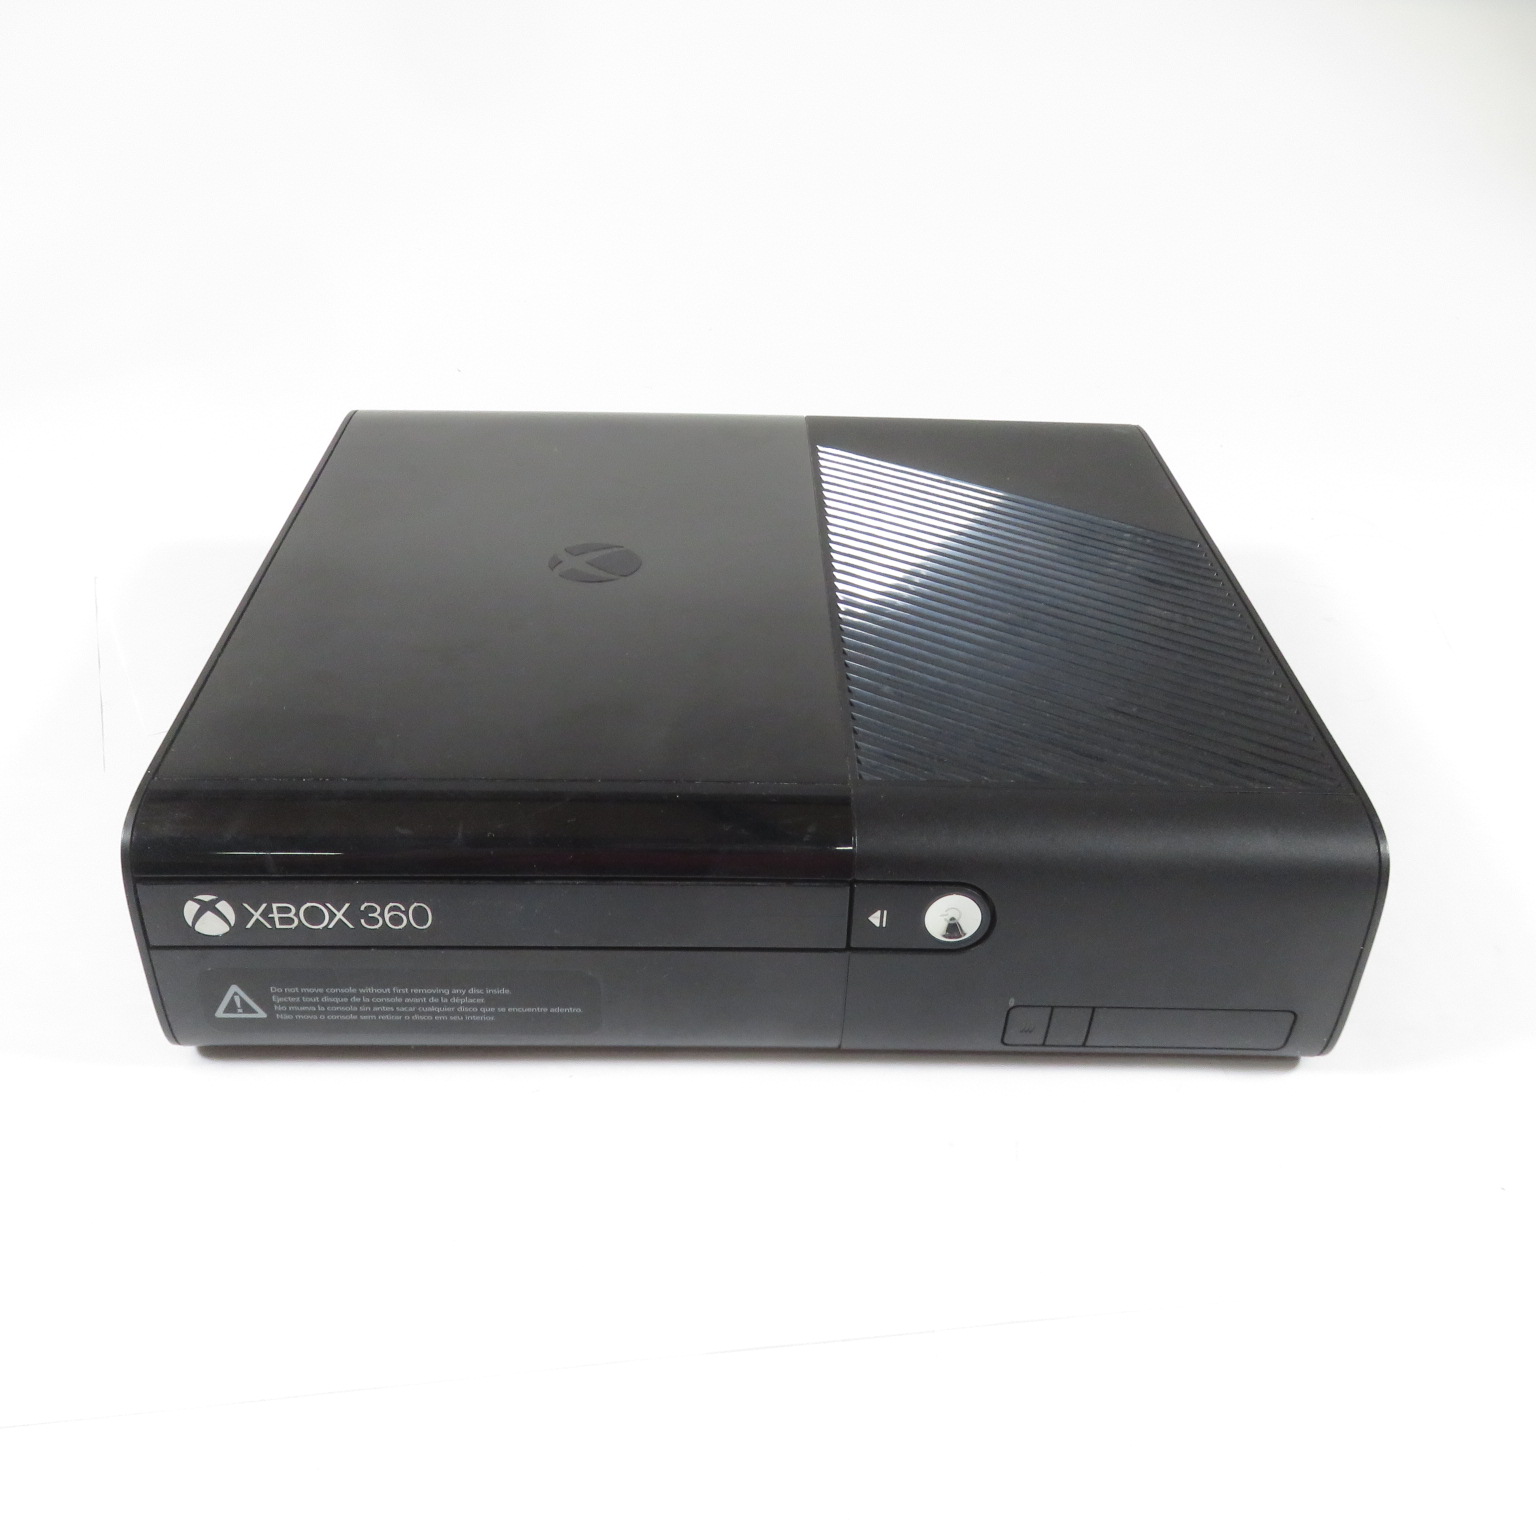 versnelling Leggen astronomie Microsoft 1538 Xbox 360 E Home Gaming Console - 4GB HDD, Black Body 6578